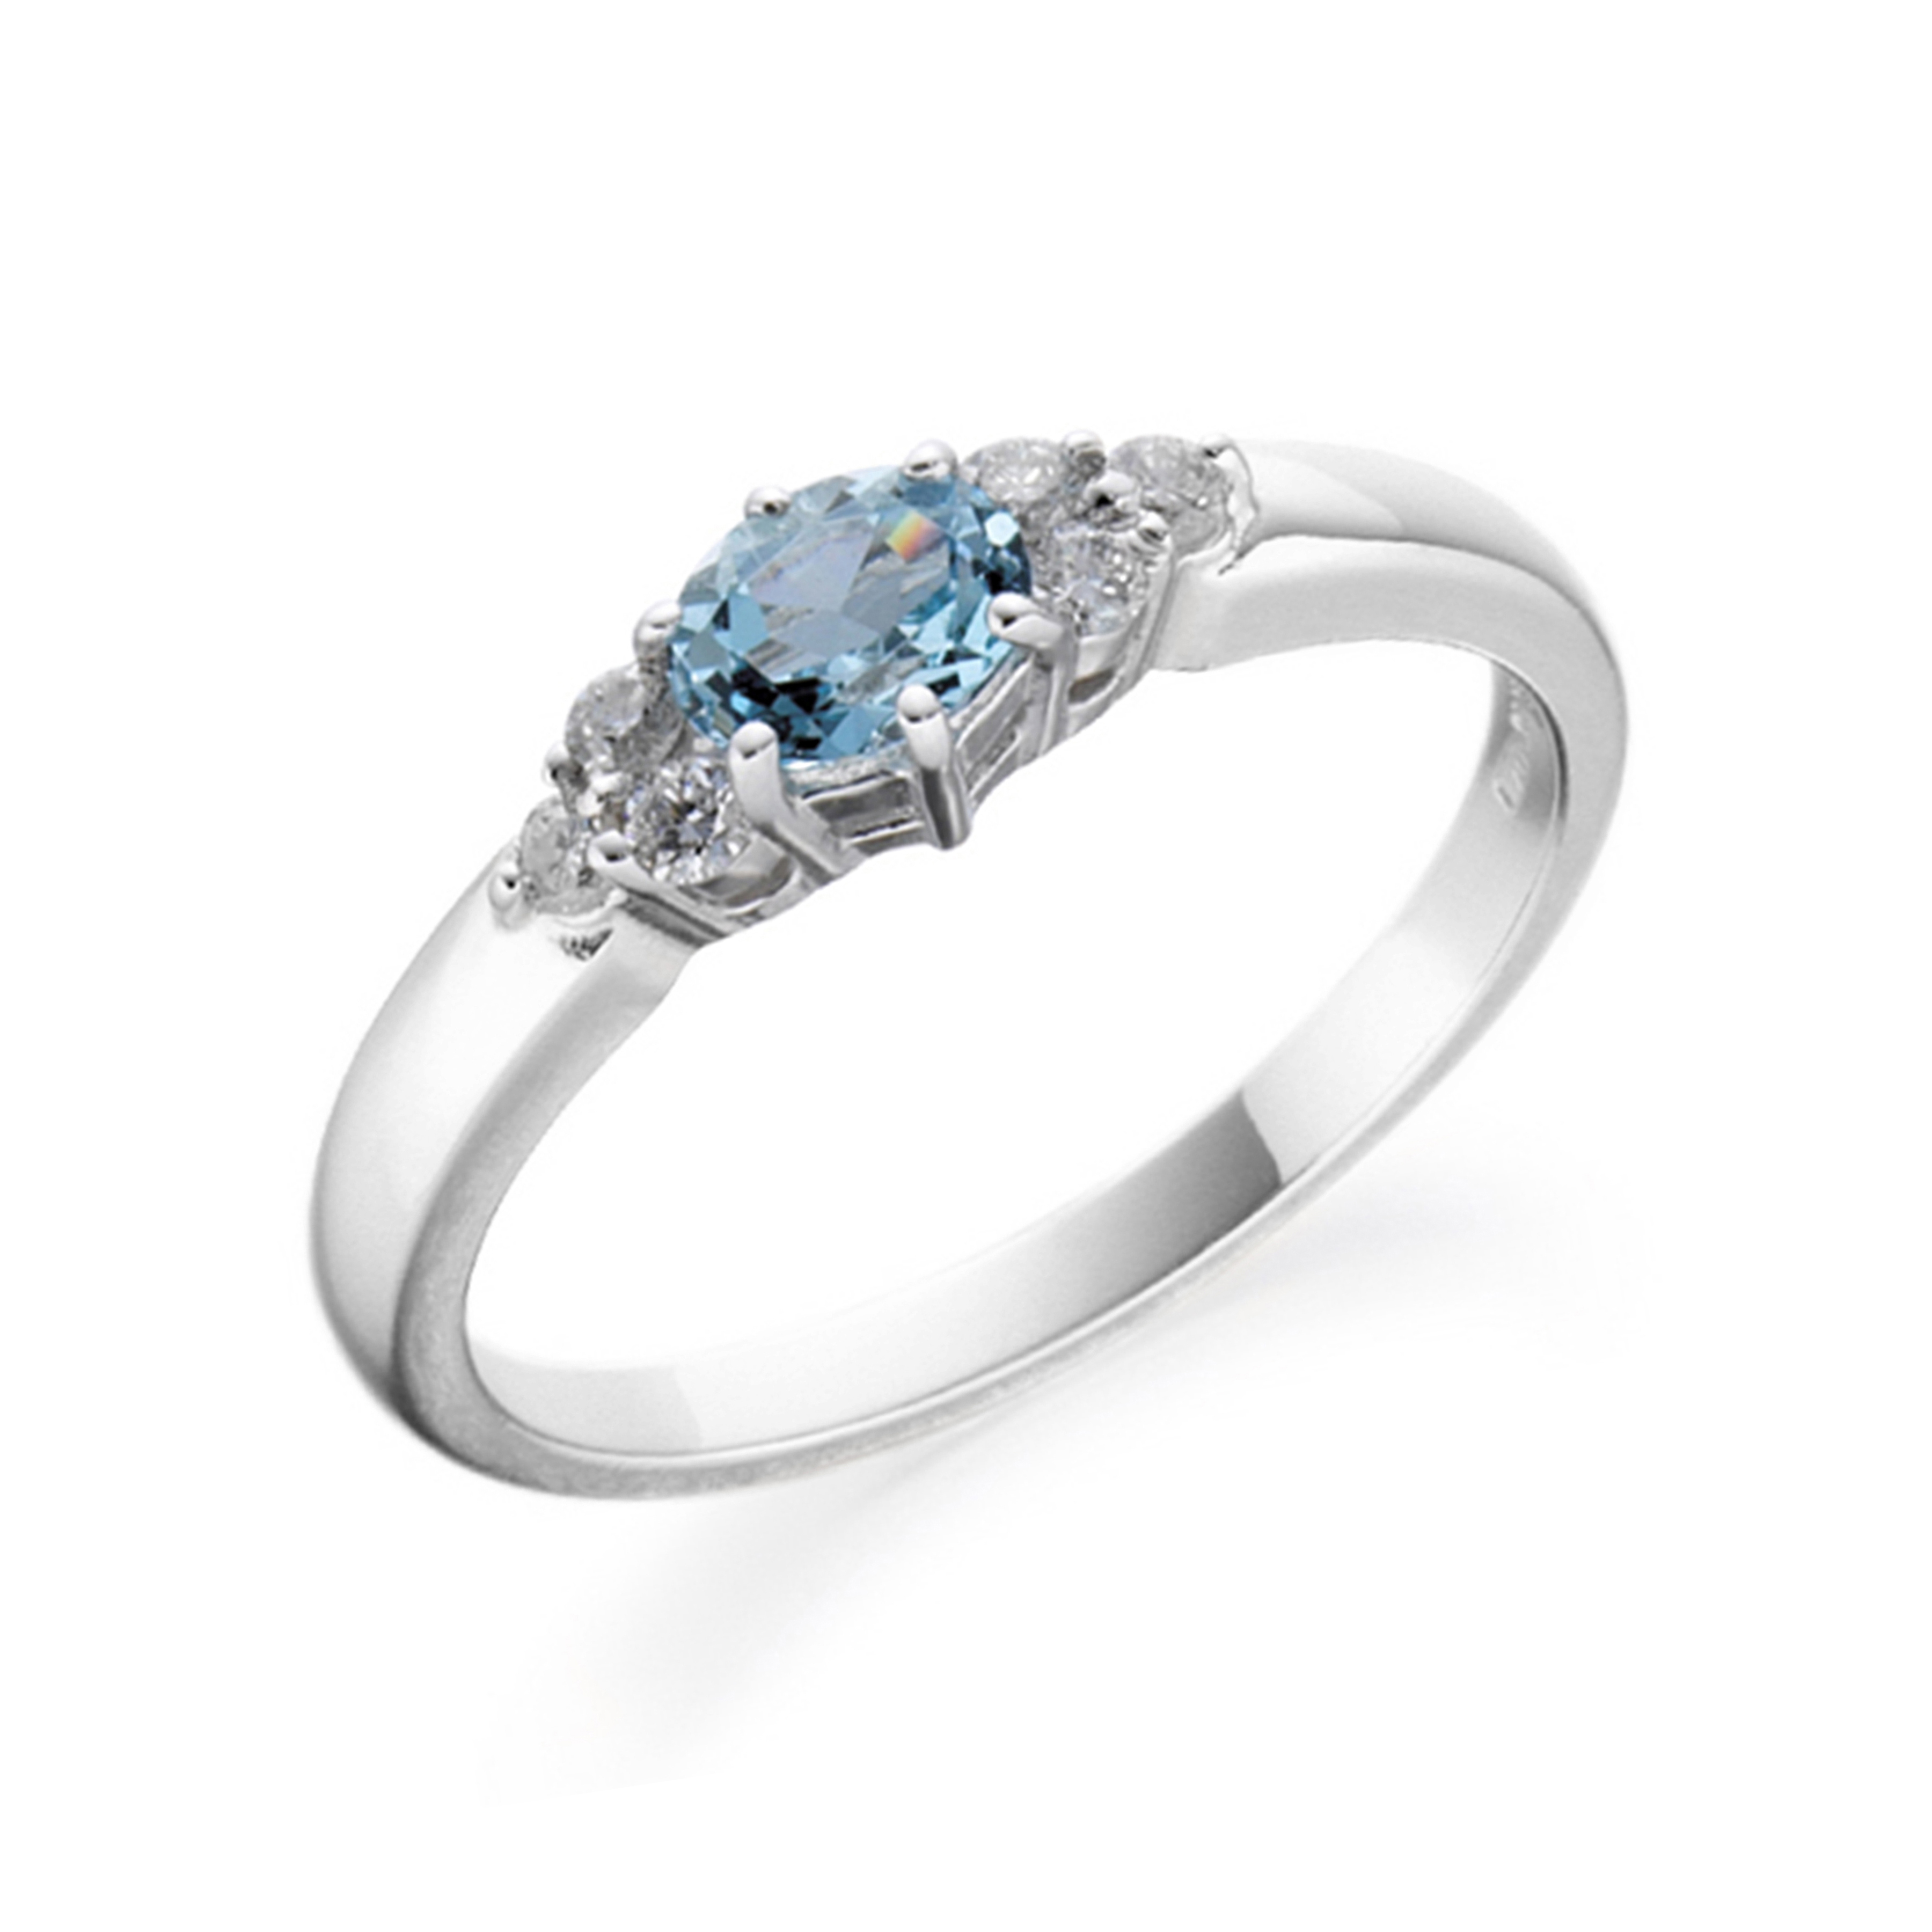 6X4mm Oval Aquamarine Seven Stone Diamond And Gemstone Ring